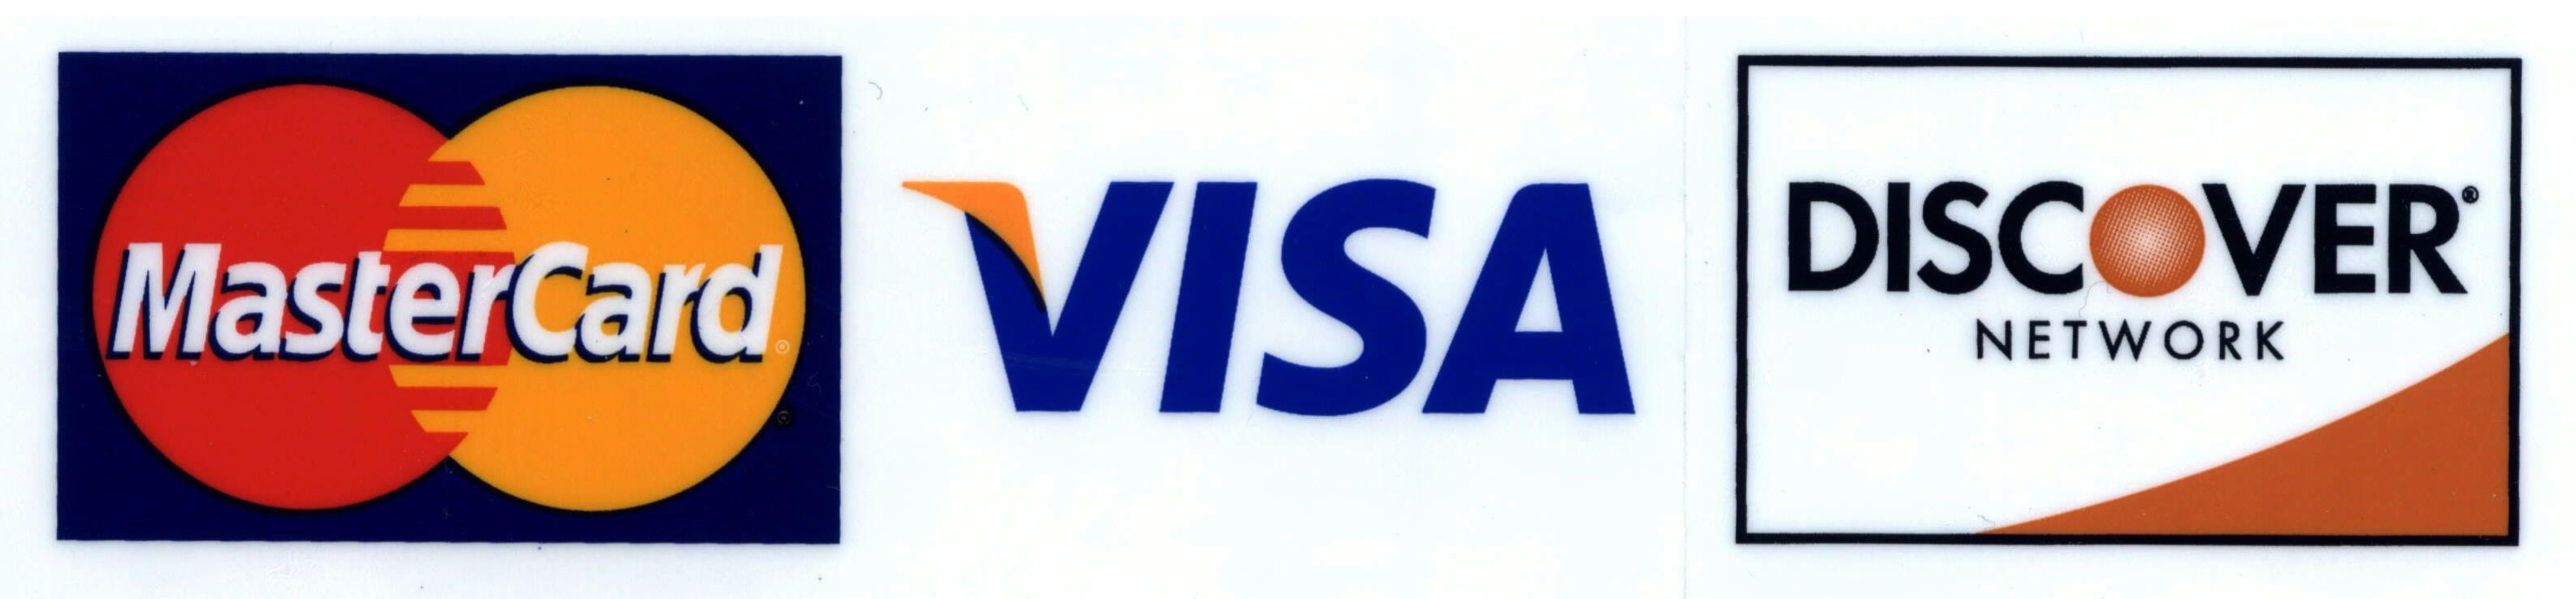 Visa MasterCard Discover Credit Card Logo - 9 Discover Credit Card Logo Vector Images - Credit Card Logos, Visa ...